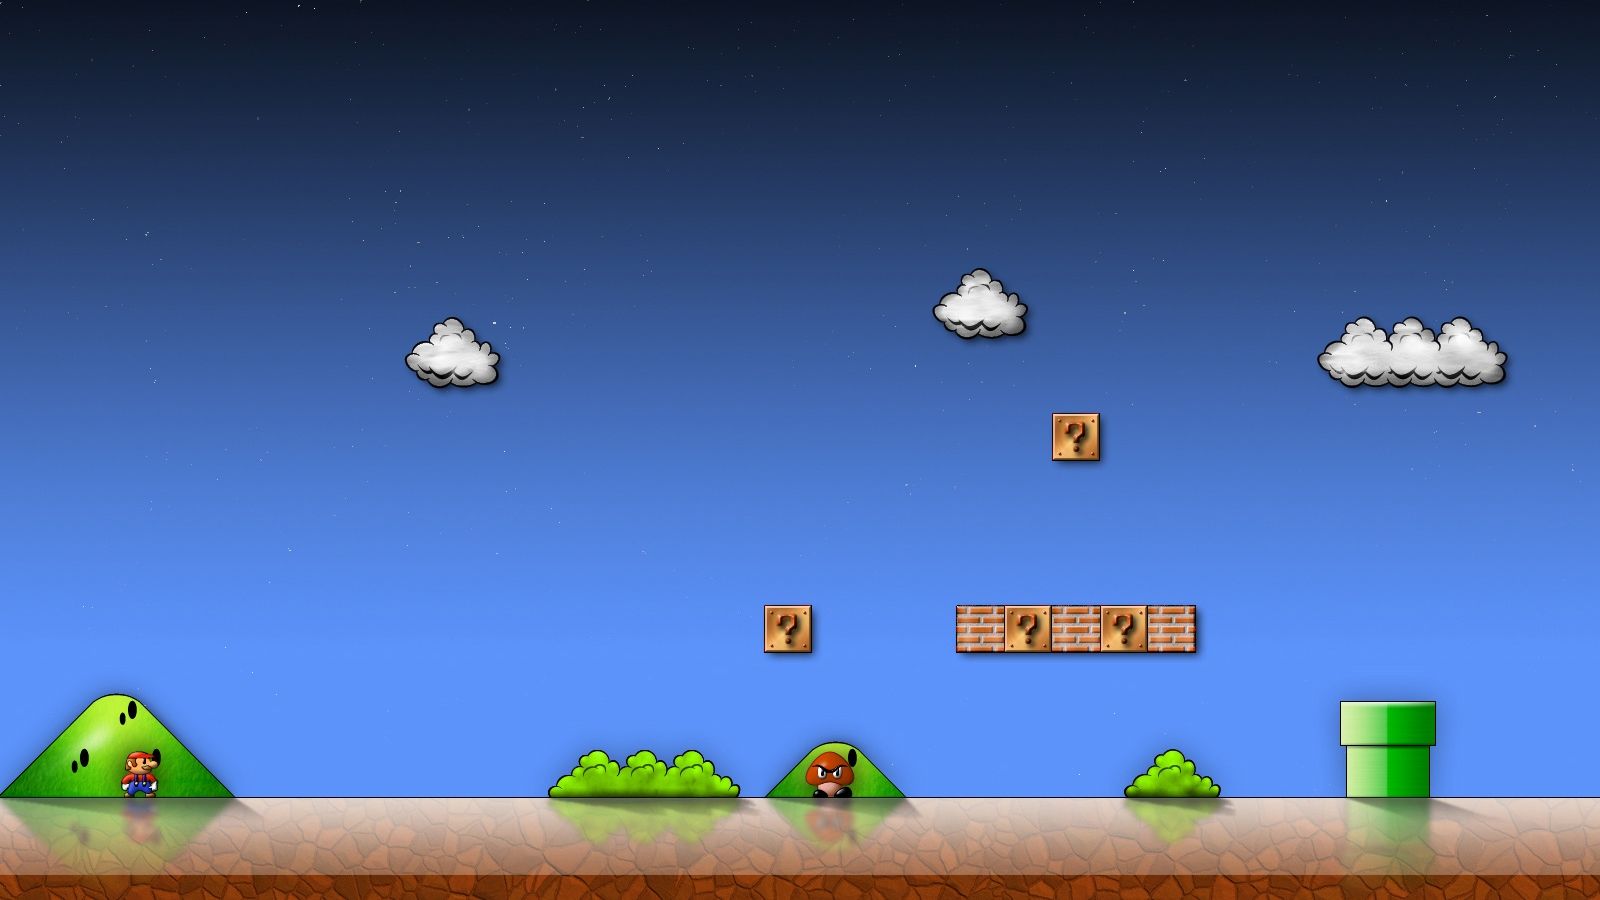 Descargar gratis Super Mario Bros fondo de pantalla hd [1600x1200] para tu